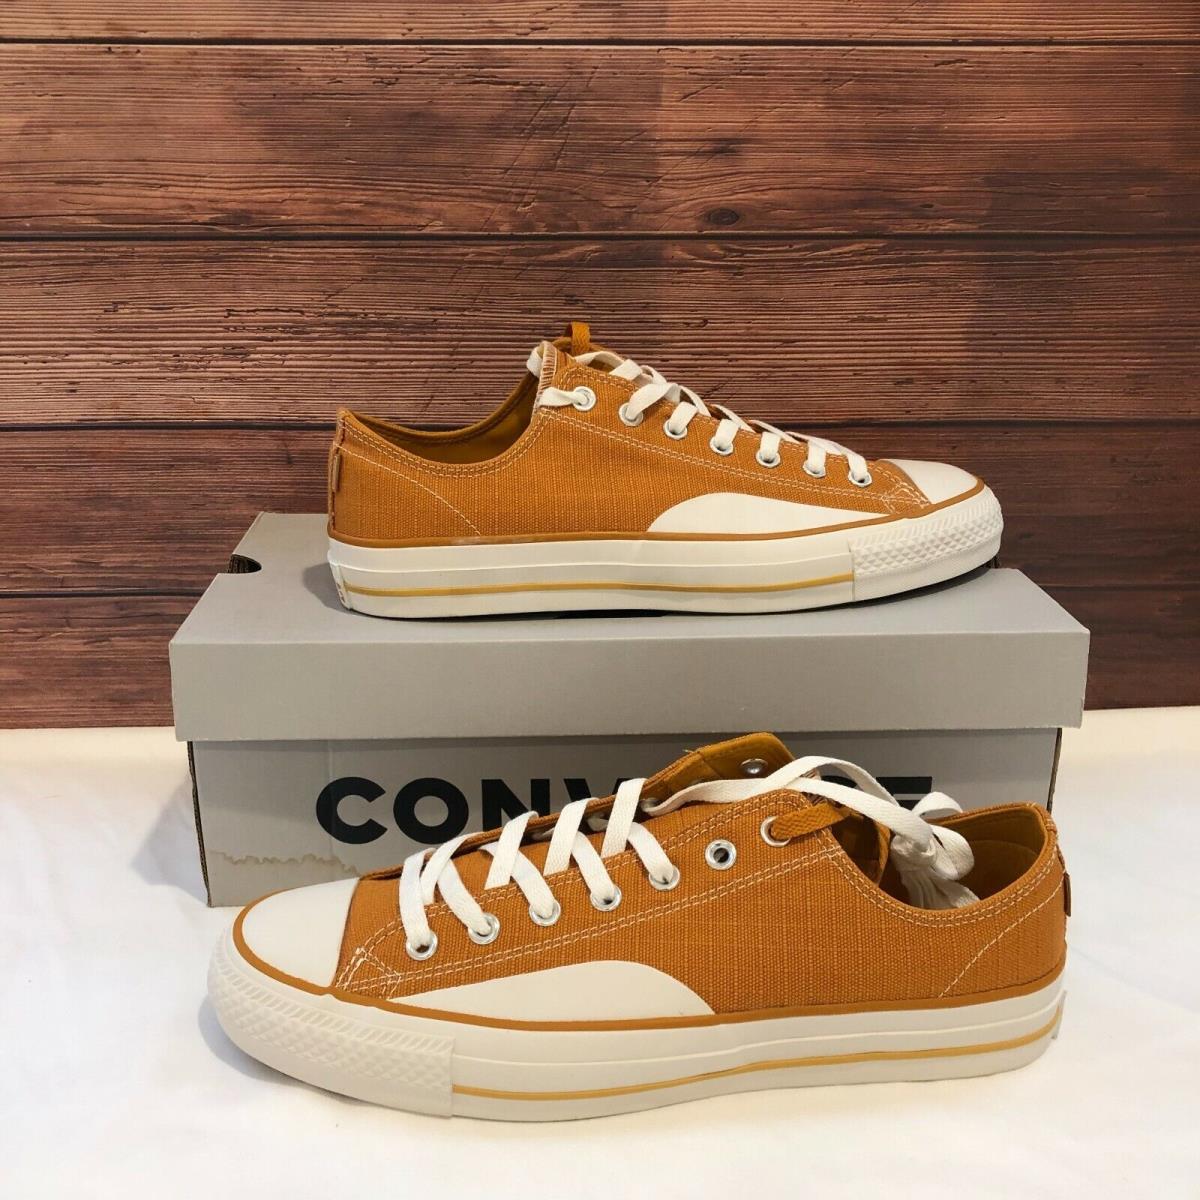 Converse Ctas Pro OX Shoes Turmeric Gold / Vintage White Sneakers 161533C Sz 11